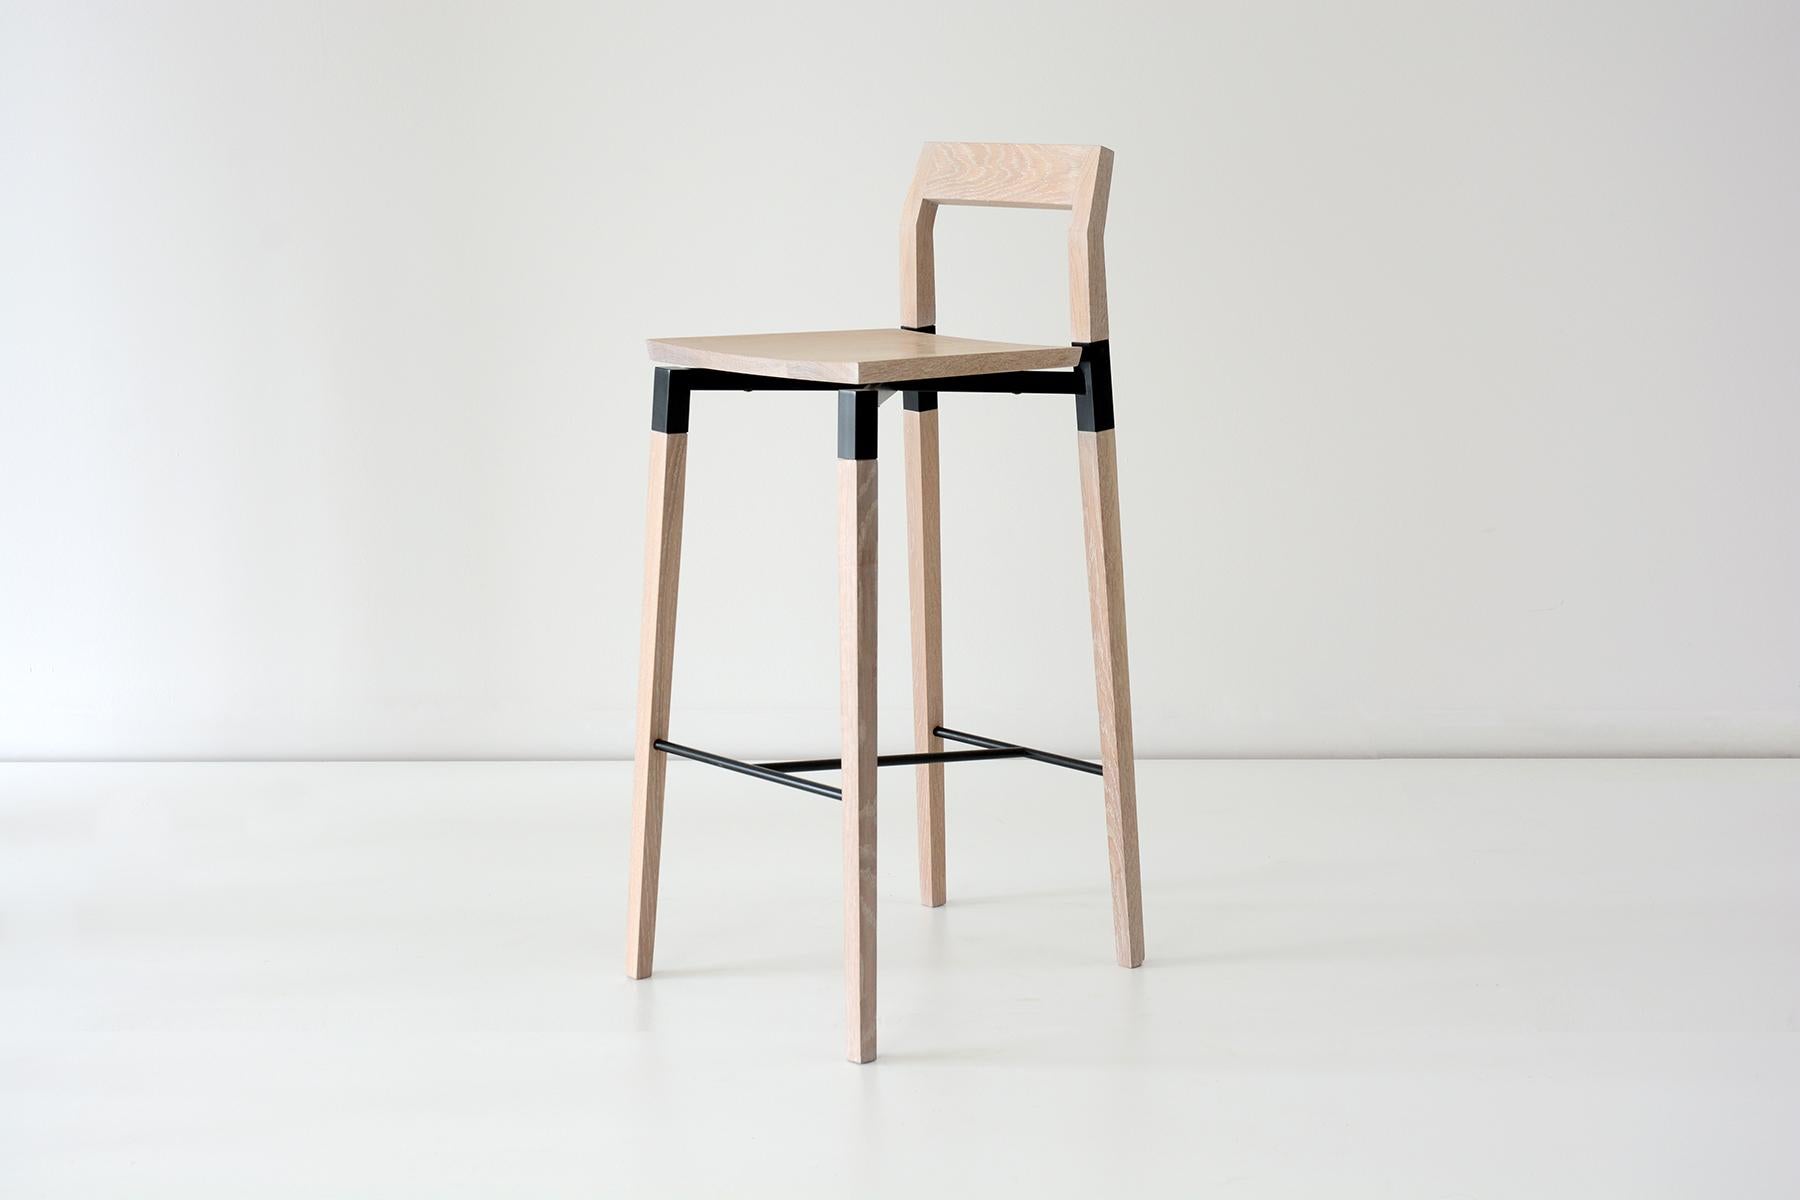 Metal plated oak parkdale bar stool by Hollis & Morris
Dimensions: 16.5